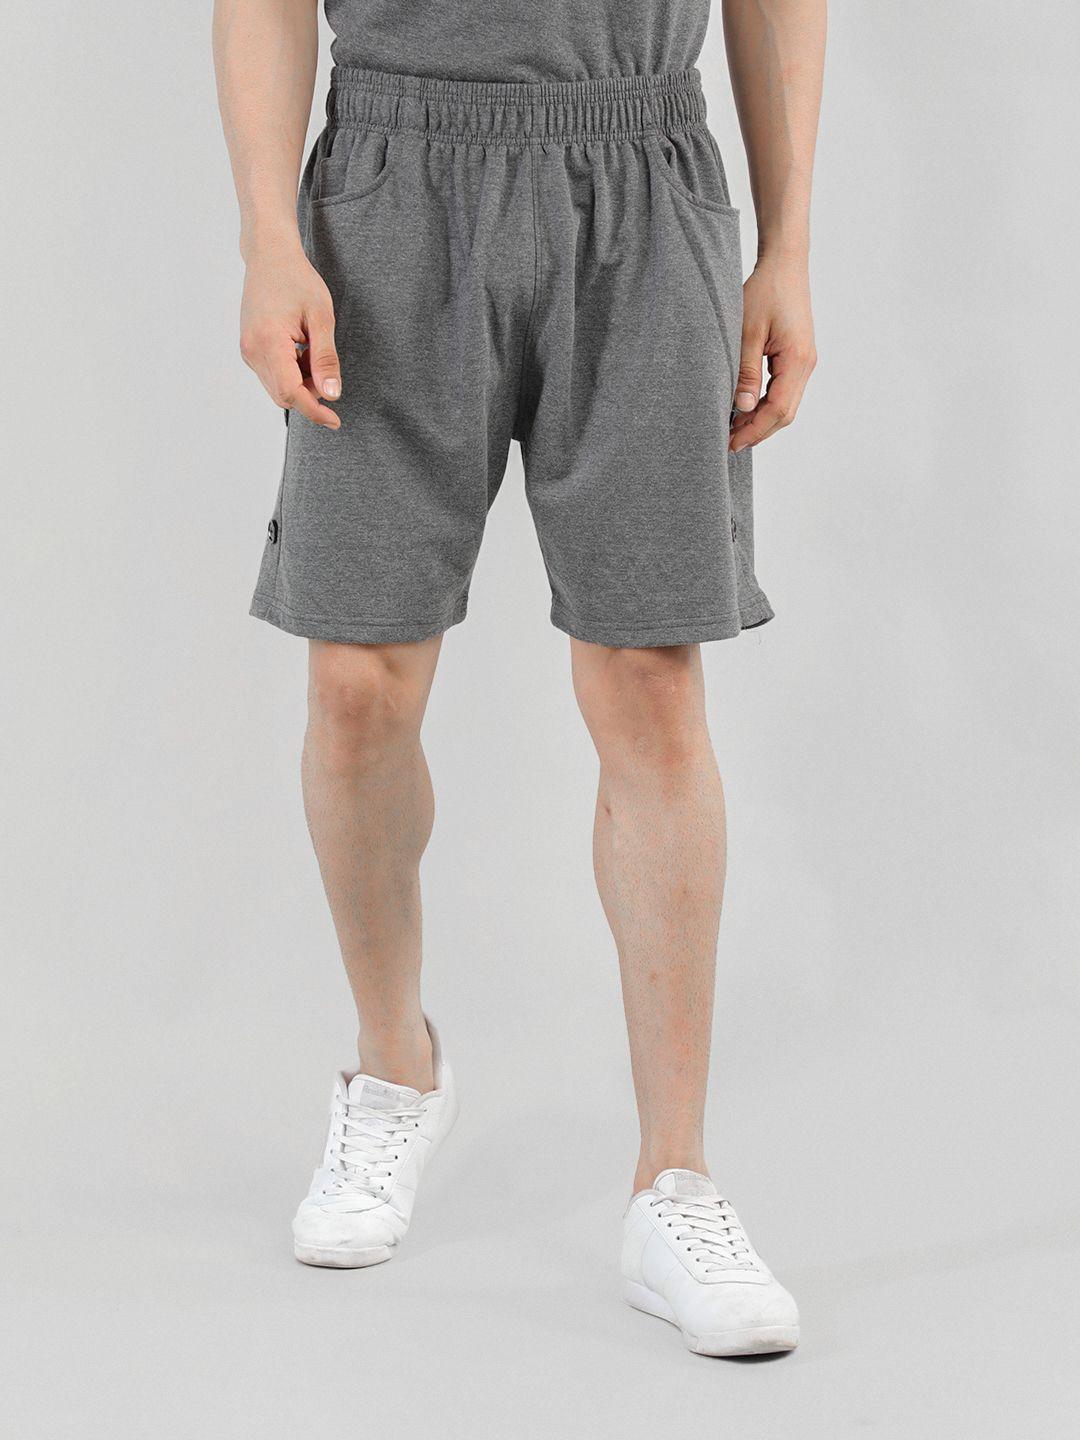 chkokko-men-grey-outdoor-shorts